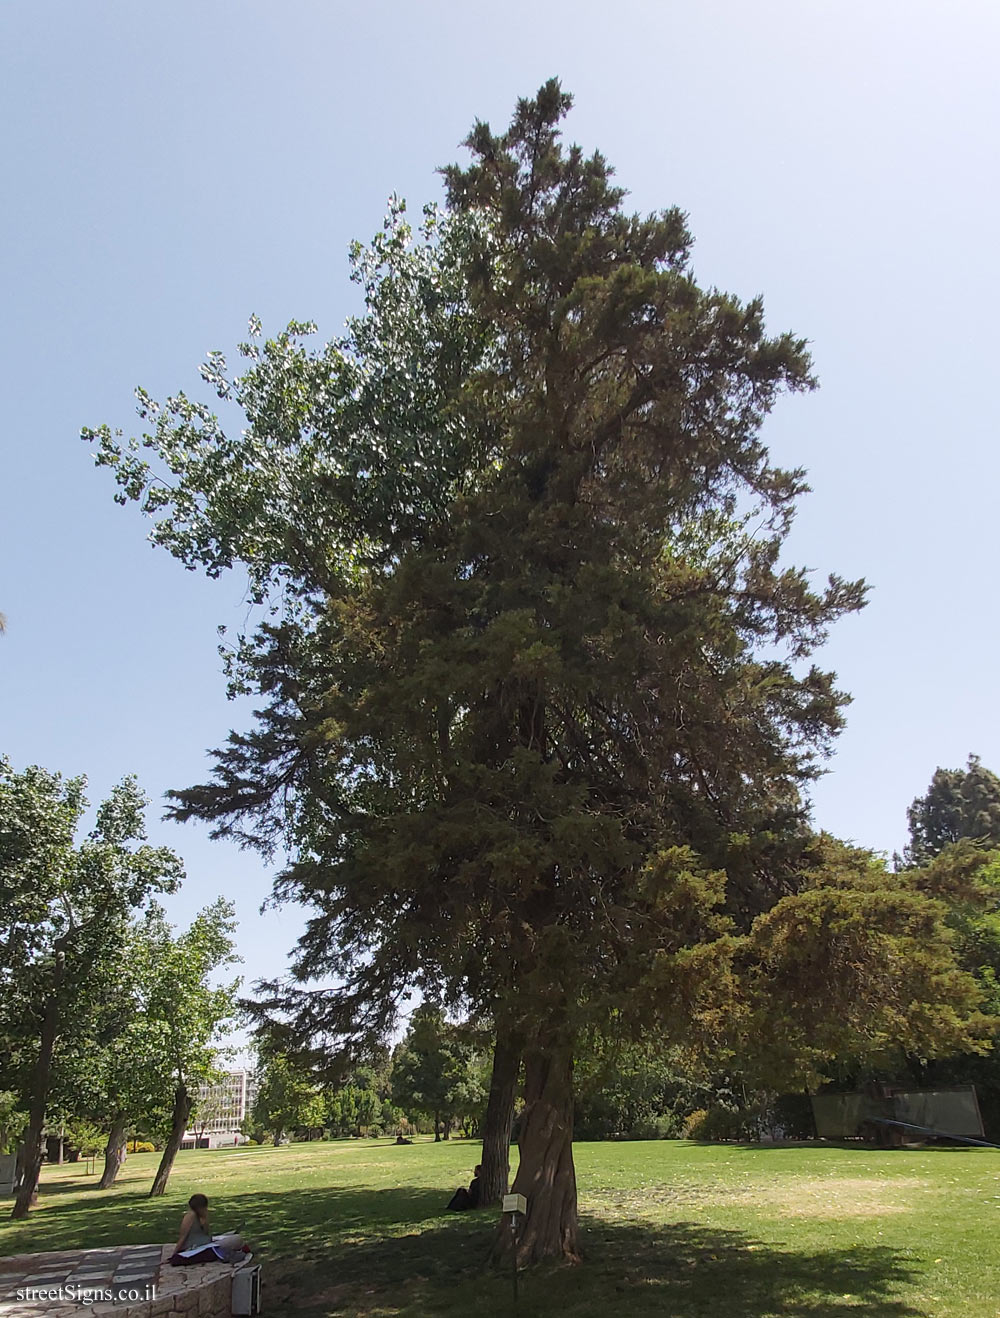 The Hebrew University of Jerusalem - Discovery Tree Walk - Monterey Cypress - Safra Campus